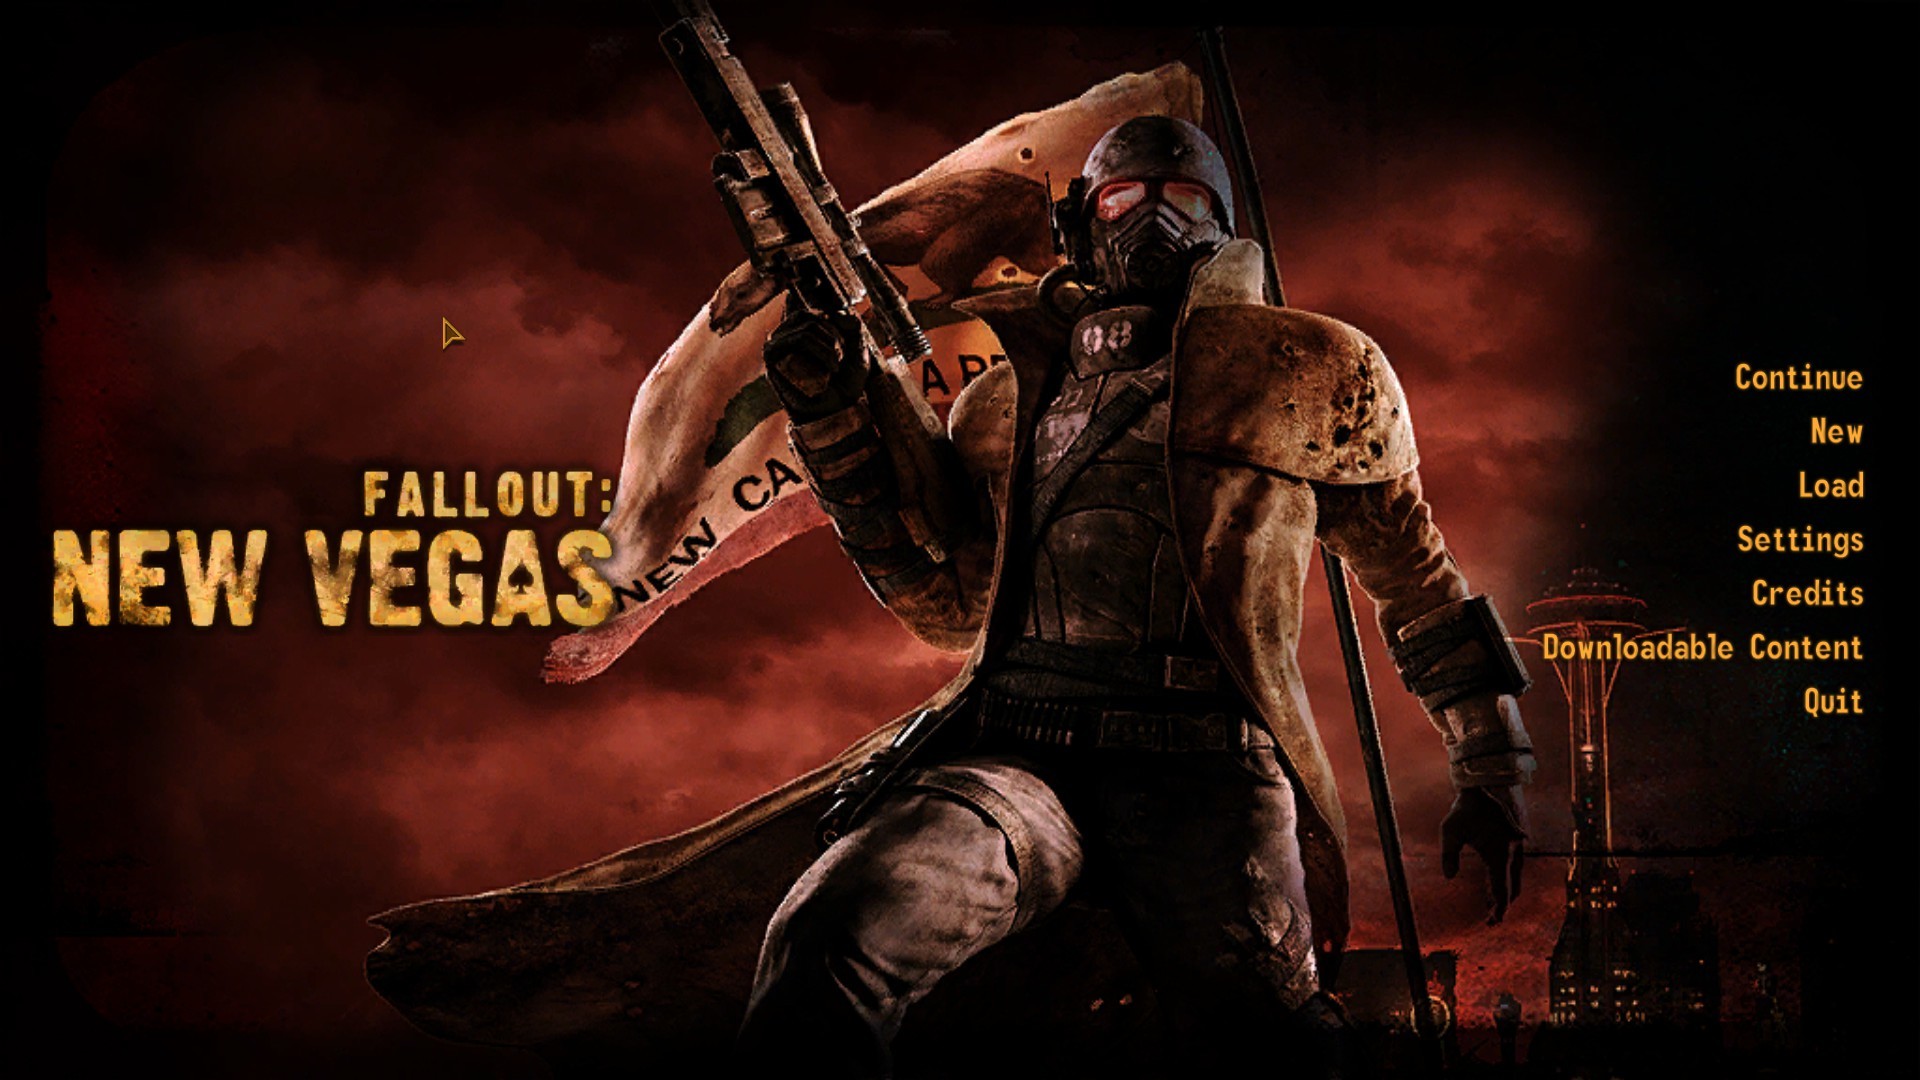 Fallout New Vegas Background Image